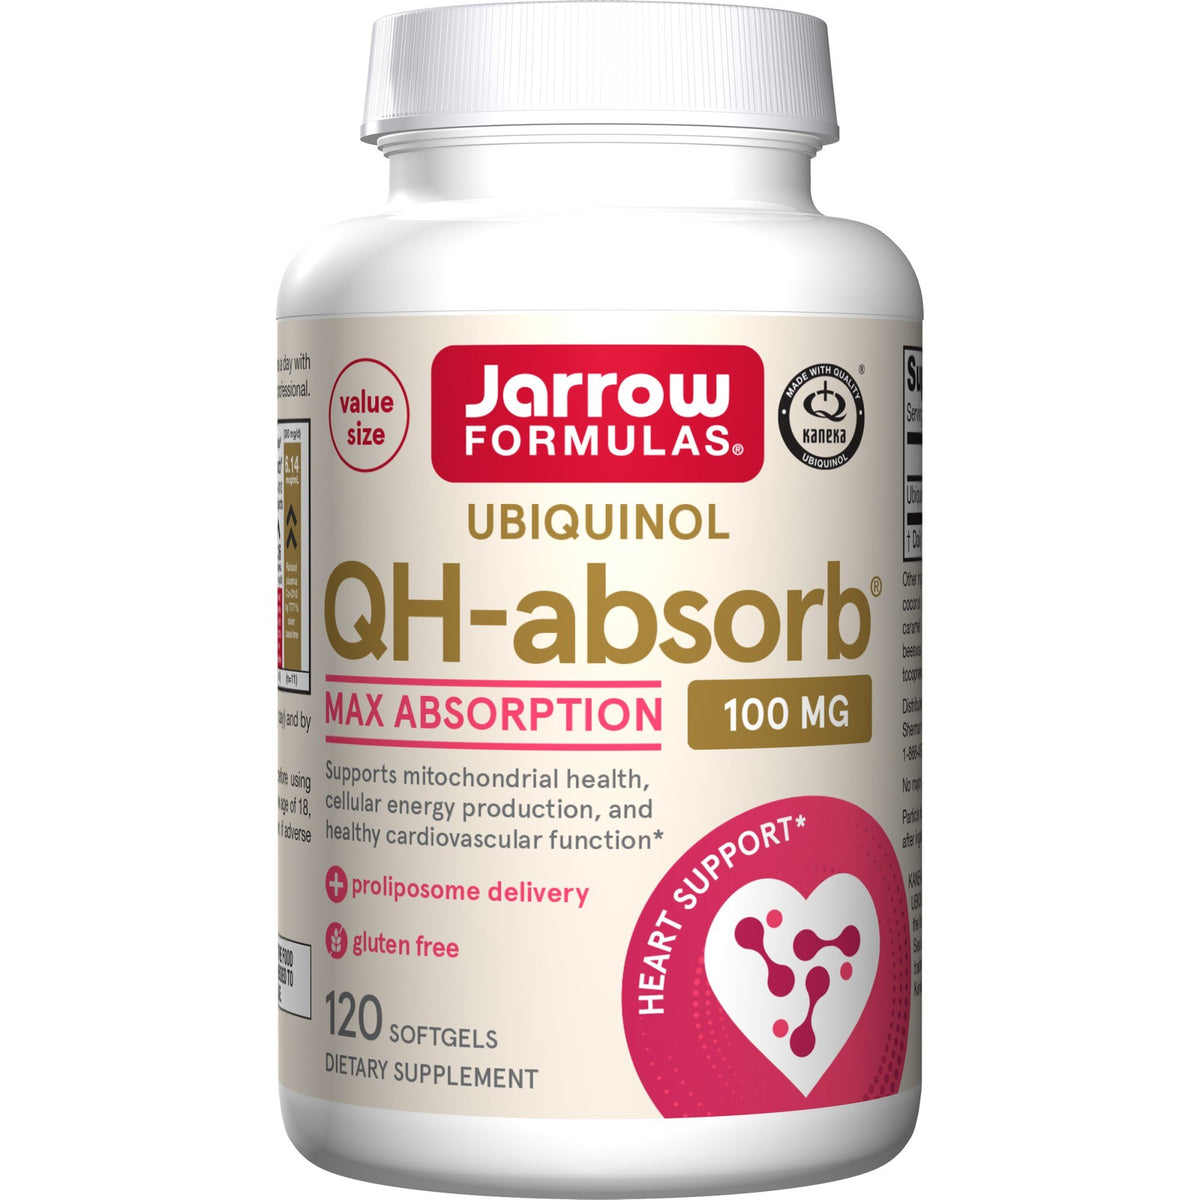 Jarrow Formulas Ubiquinol QH-absorb 100 mg 120 Softgel